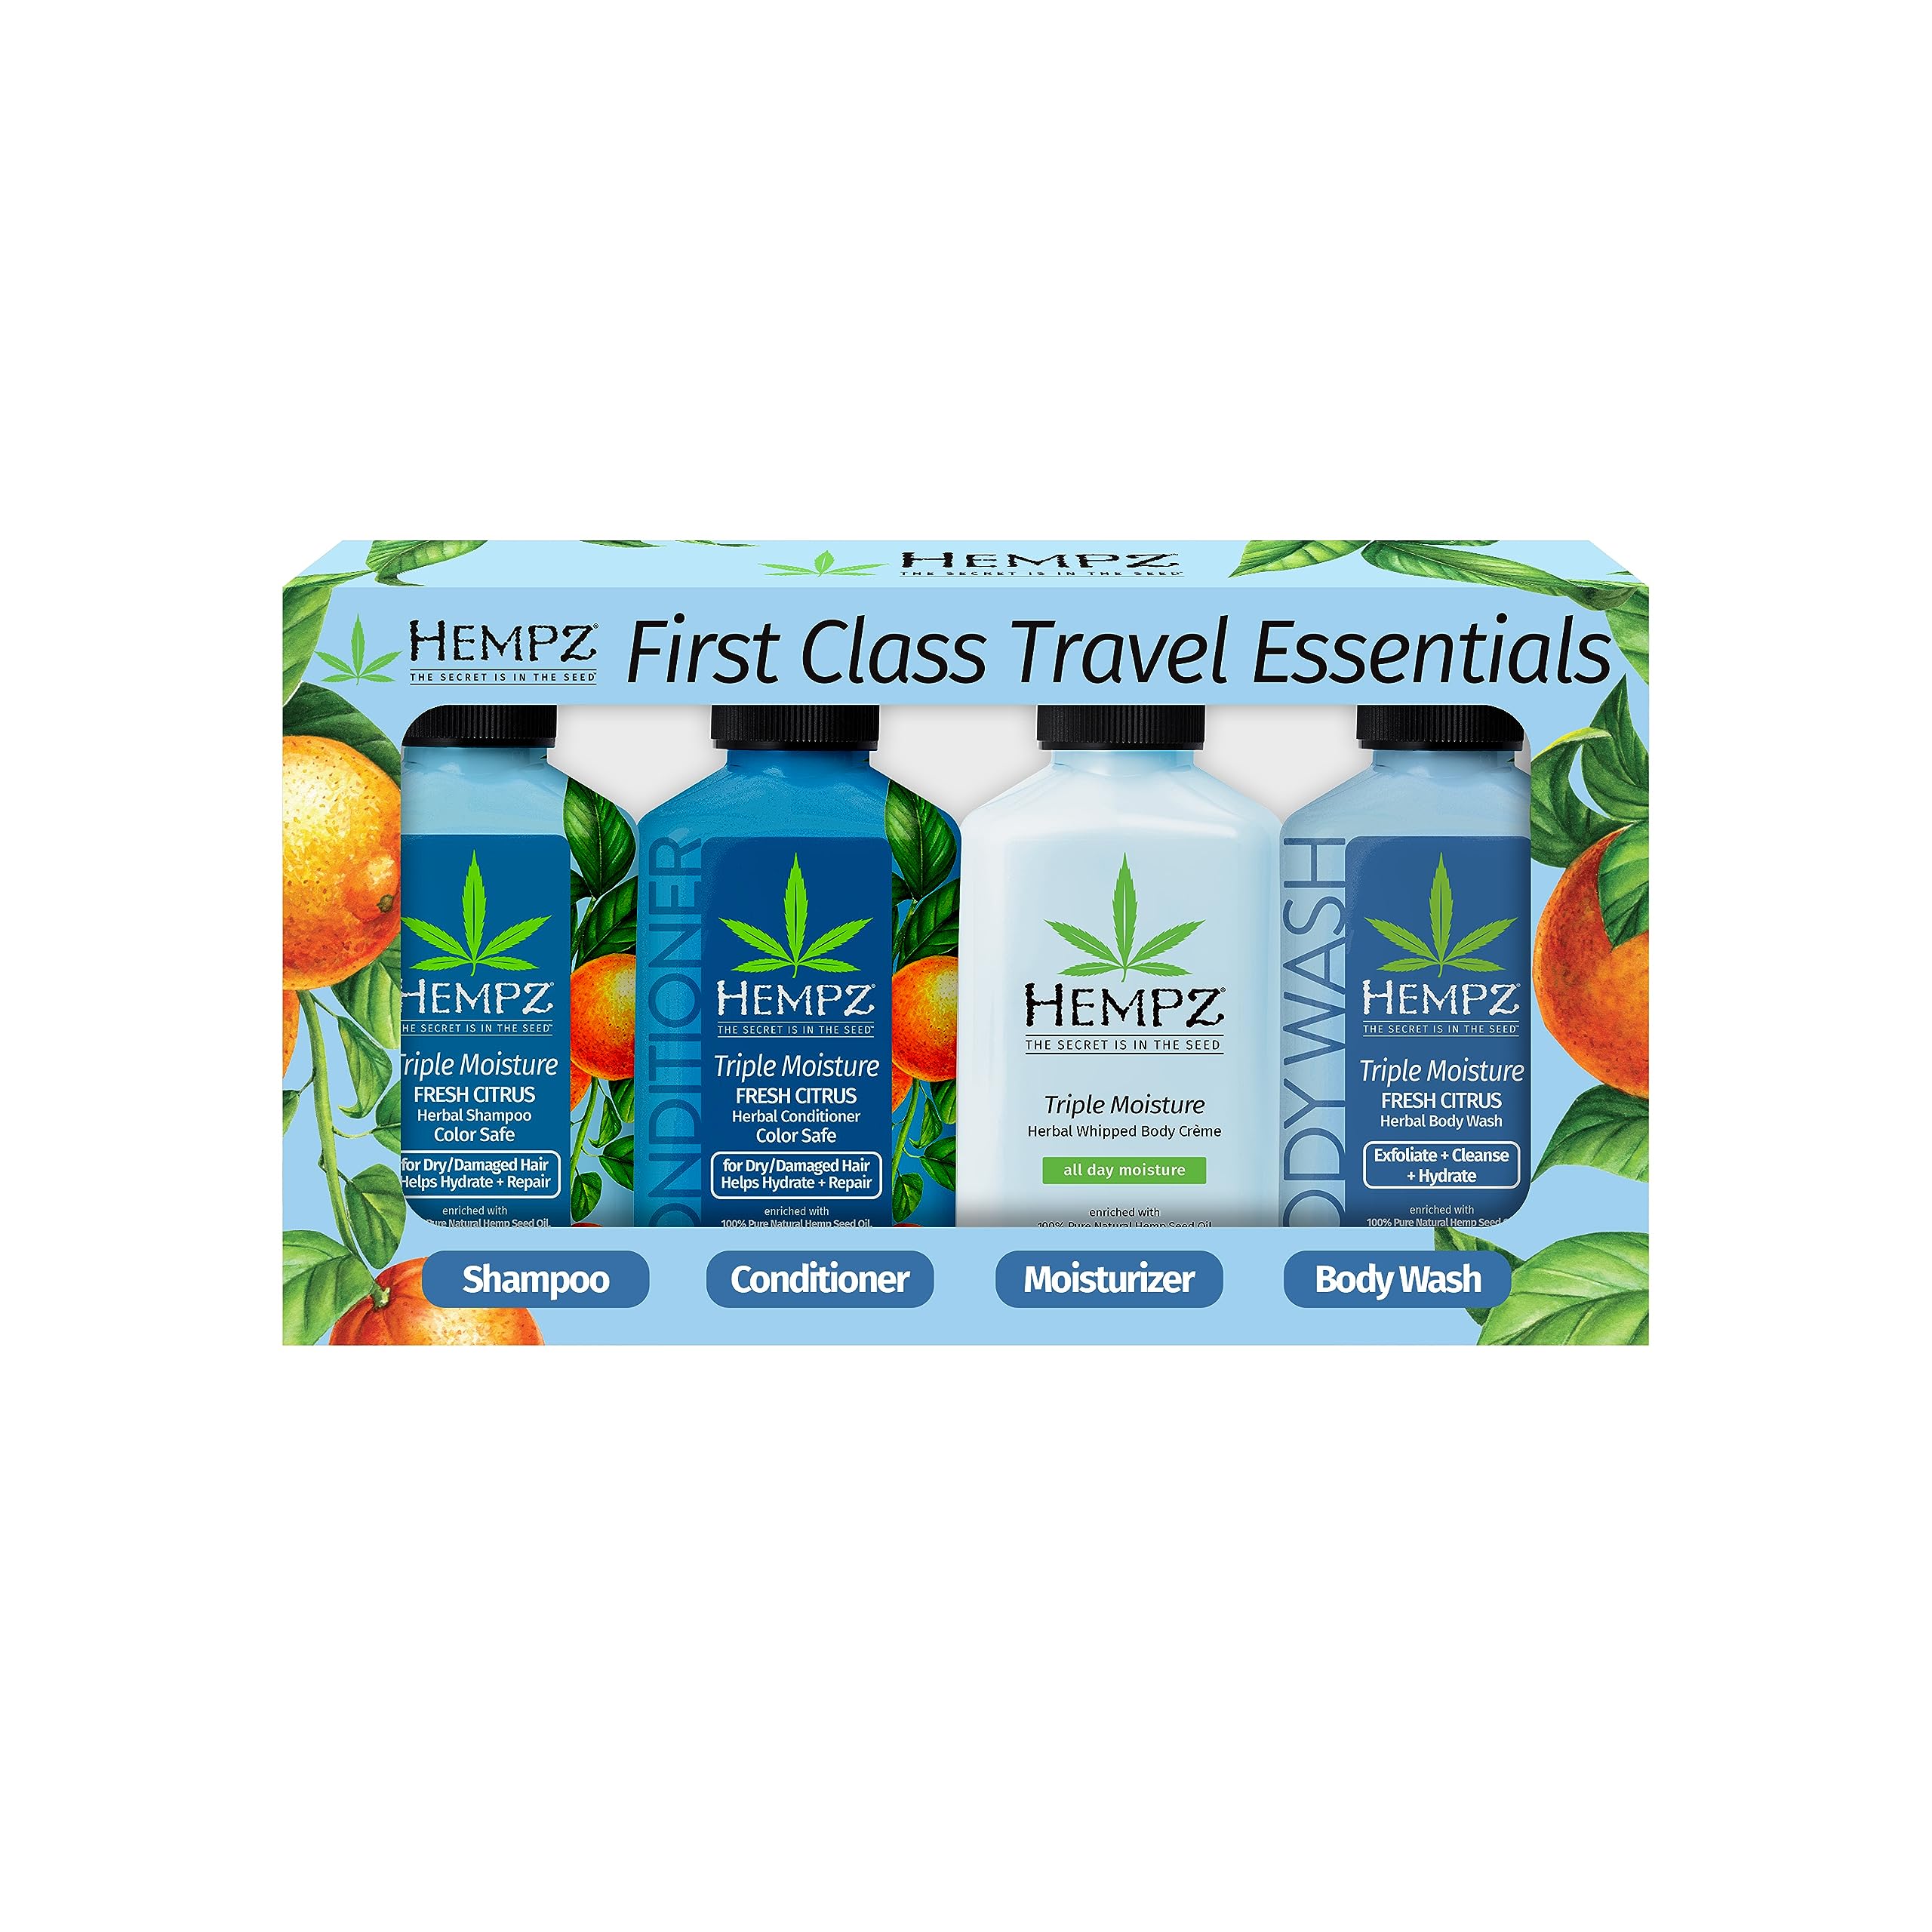 Hempz First Class Travel Essentials – Triple Moisture Fresh Citrus Herbal Conditioner, Moisturizer, & Body Wash for Traveling Bath or Shower, Hair & Skin Care for Women or Men, 4-Pack, 2.5 Oz Bottles